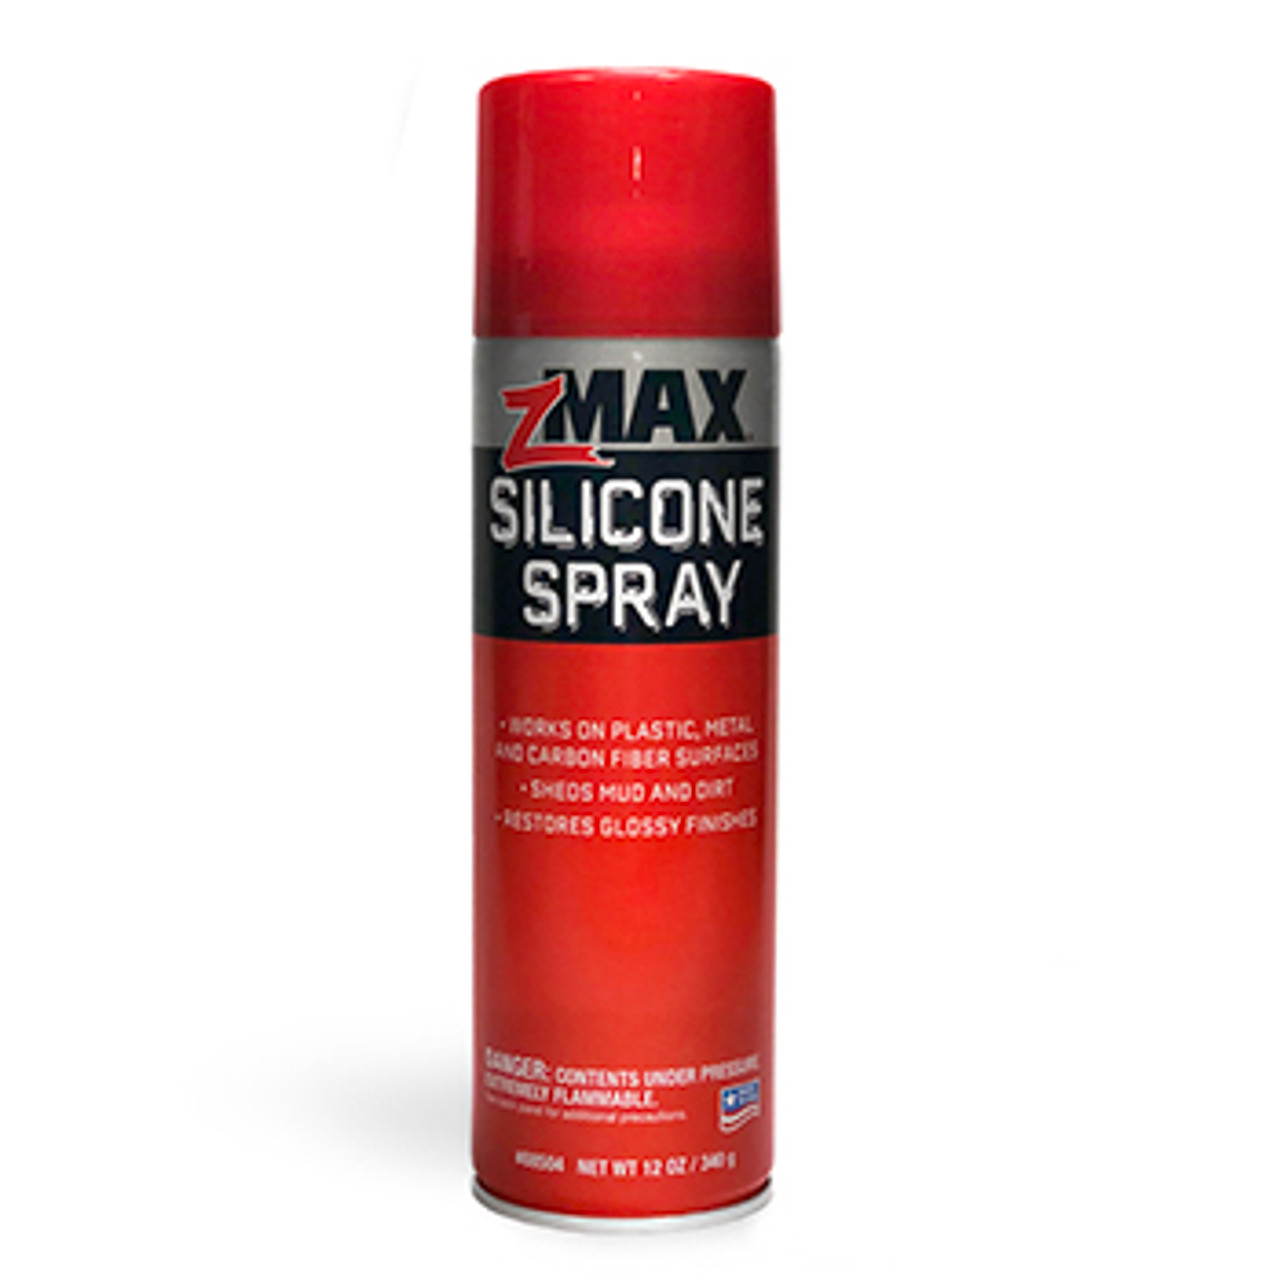 zMAX Silicone Spray (same as Driven Speed Shield)